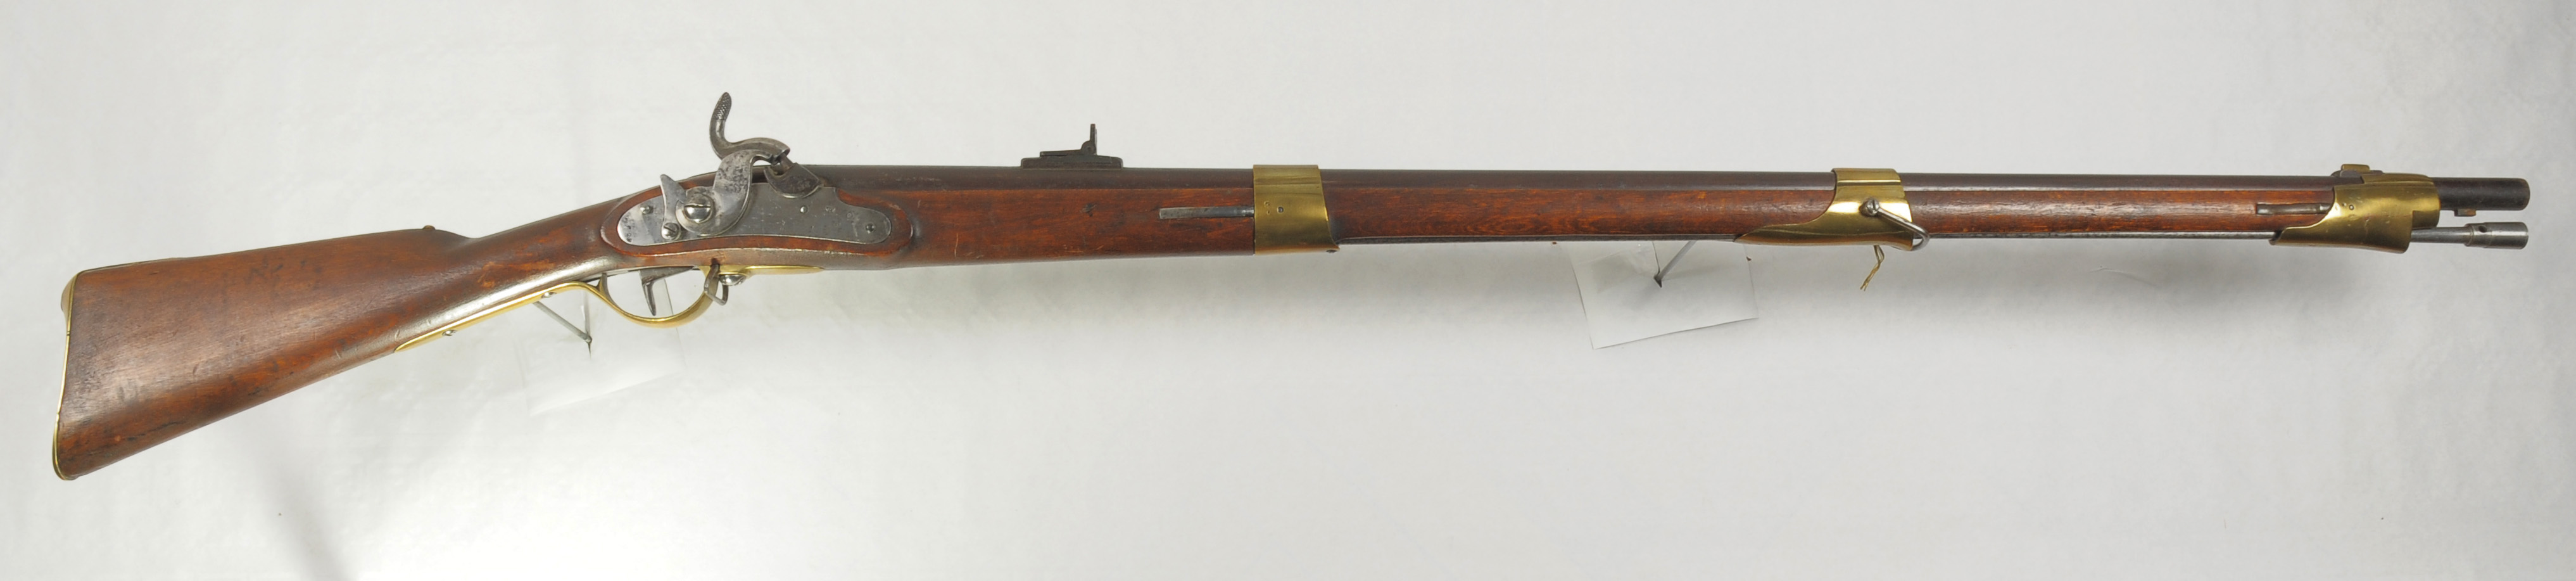 ./guns/rifle/bilder/Rifle-Kongsberg-Perkusjon-M1834-41-51-NNNN-1.jpg